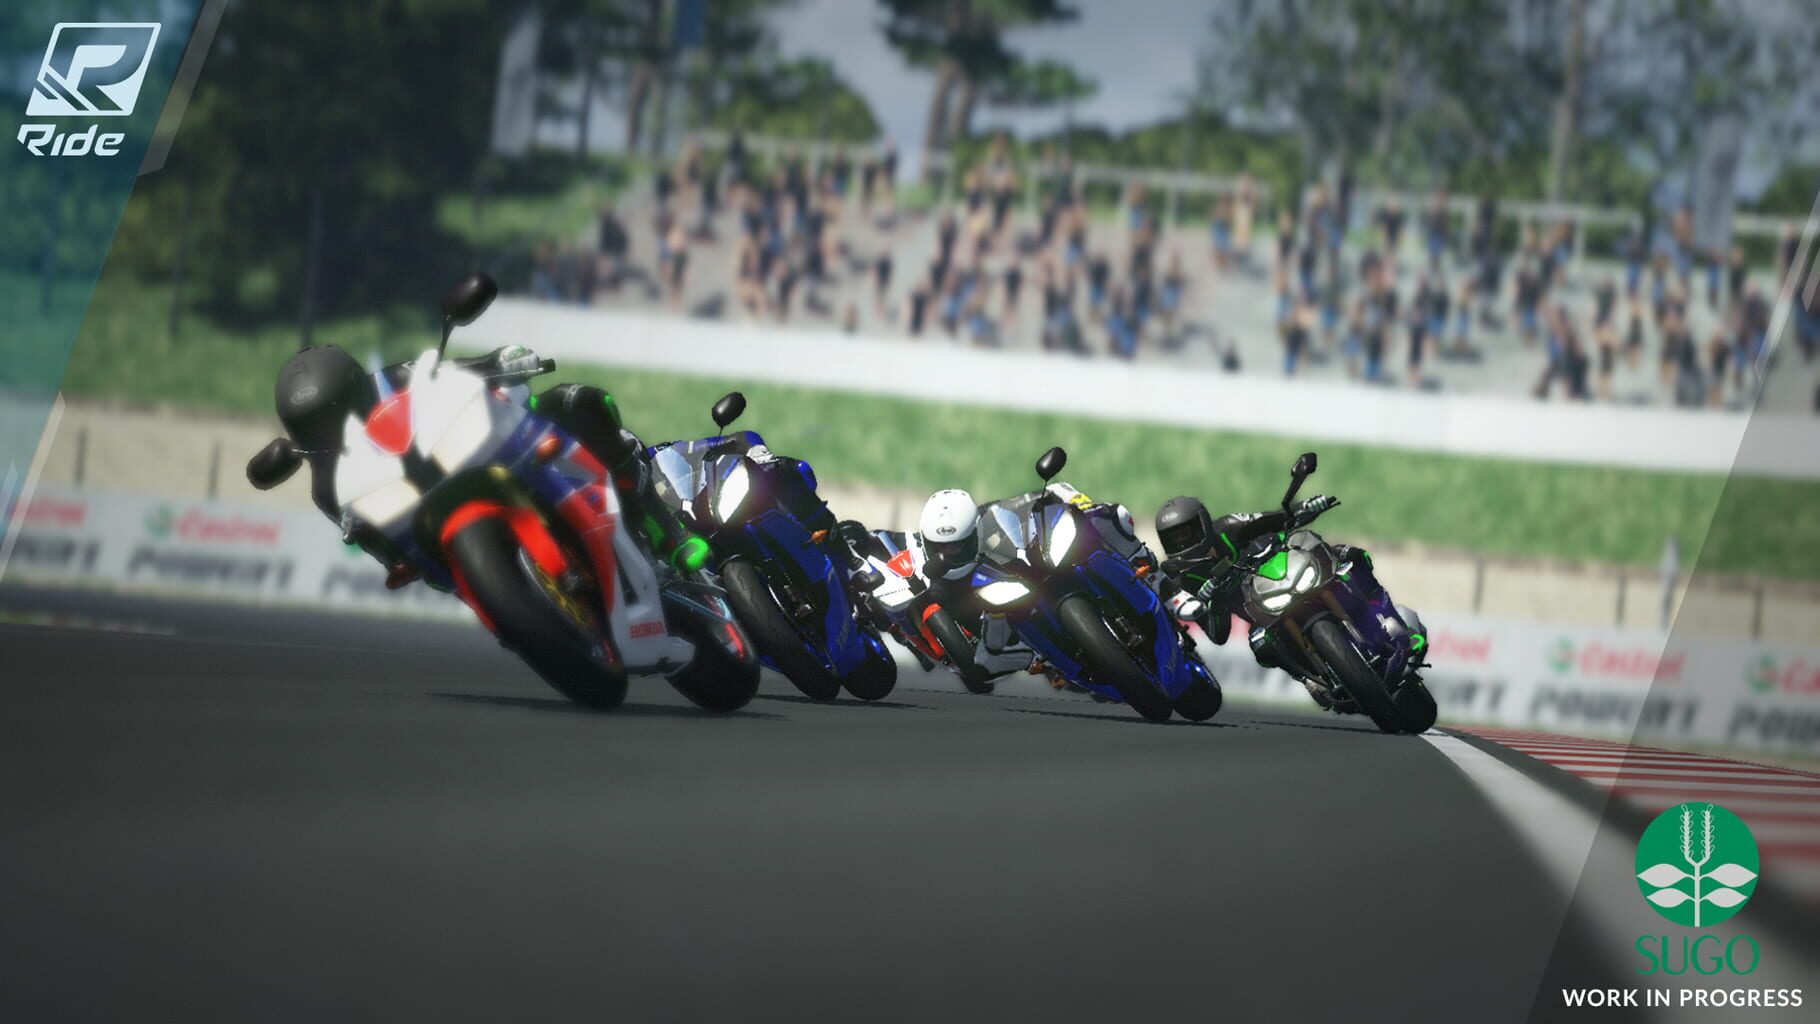 Screenshot for Ride